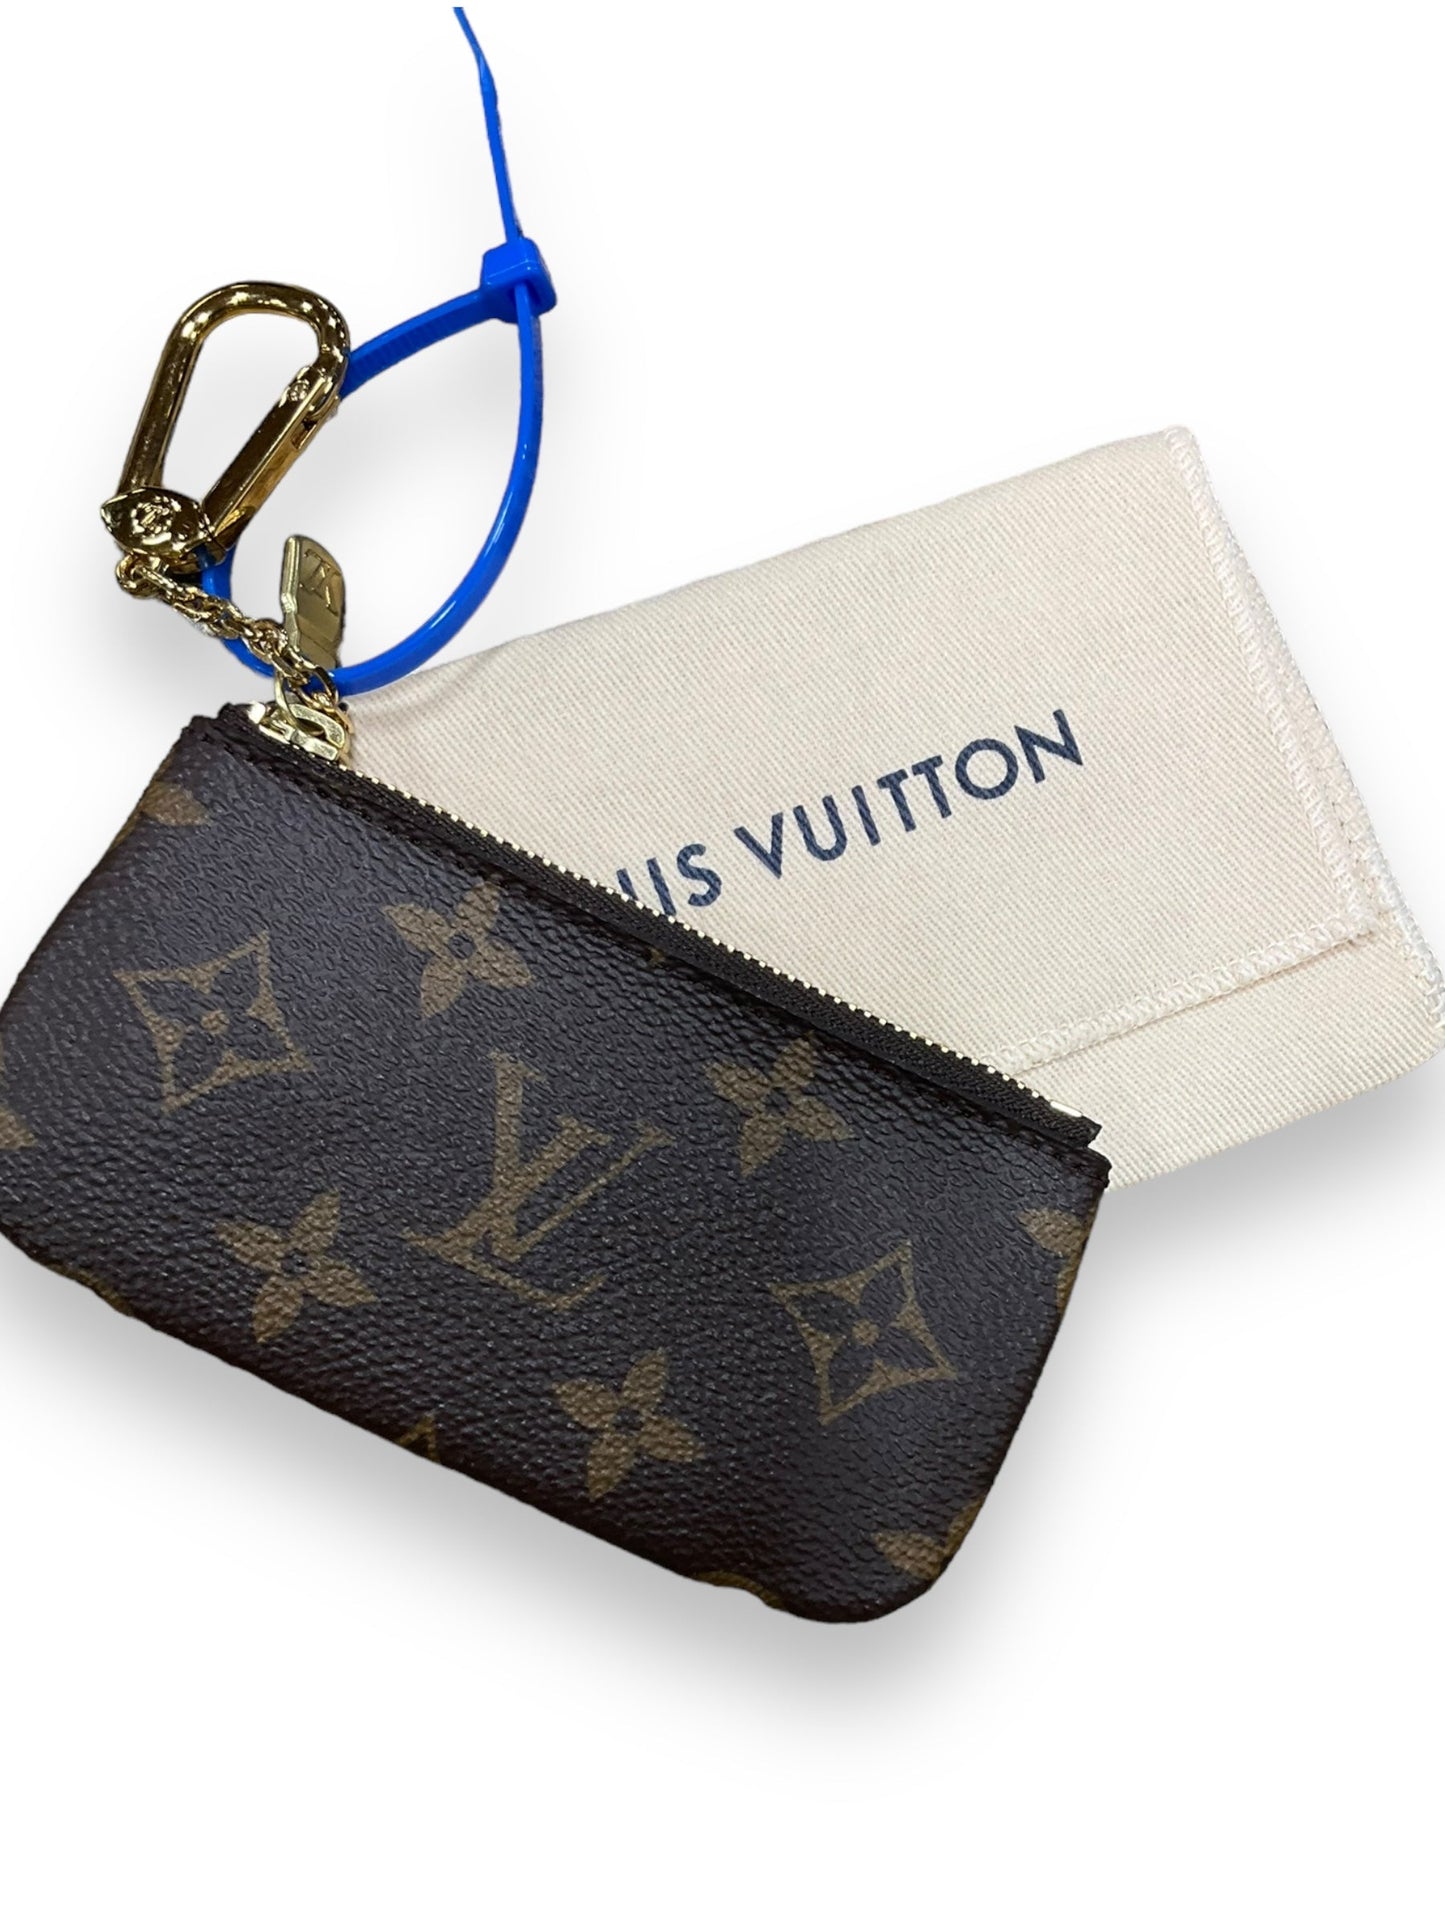 Key Chain Luxury Designer Louis Vuitton, Size Small